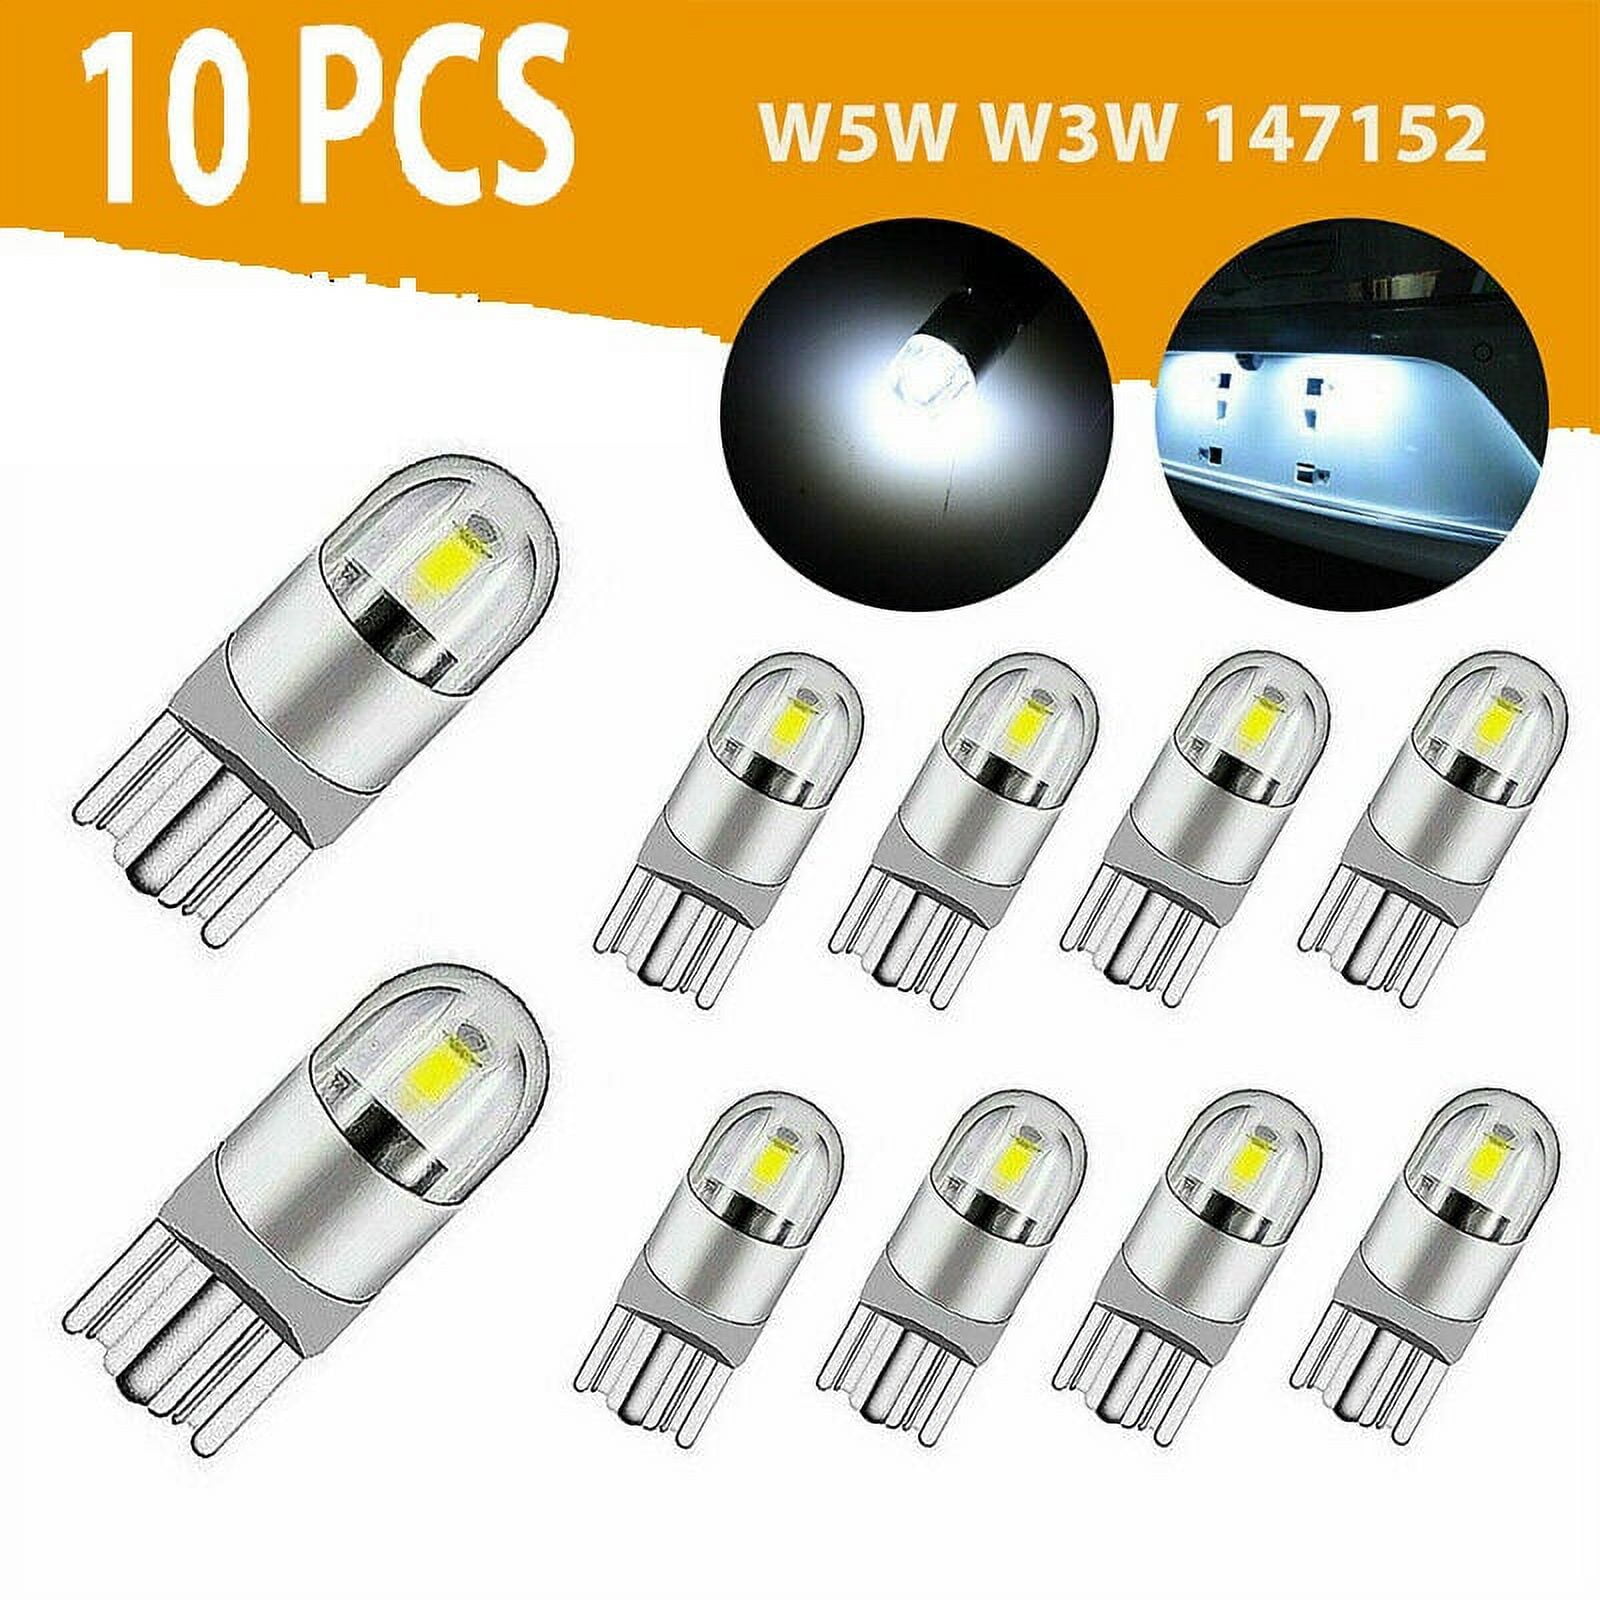 MTEC T10 W5W 194 168 COB Canbus Error Free LED Light Bulbs